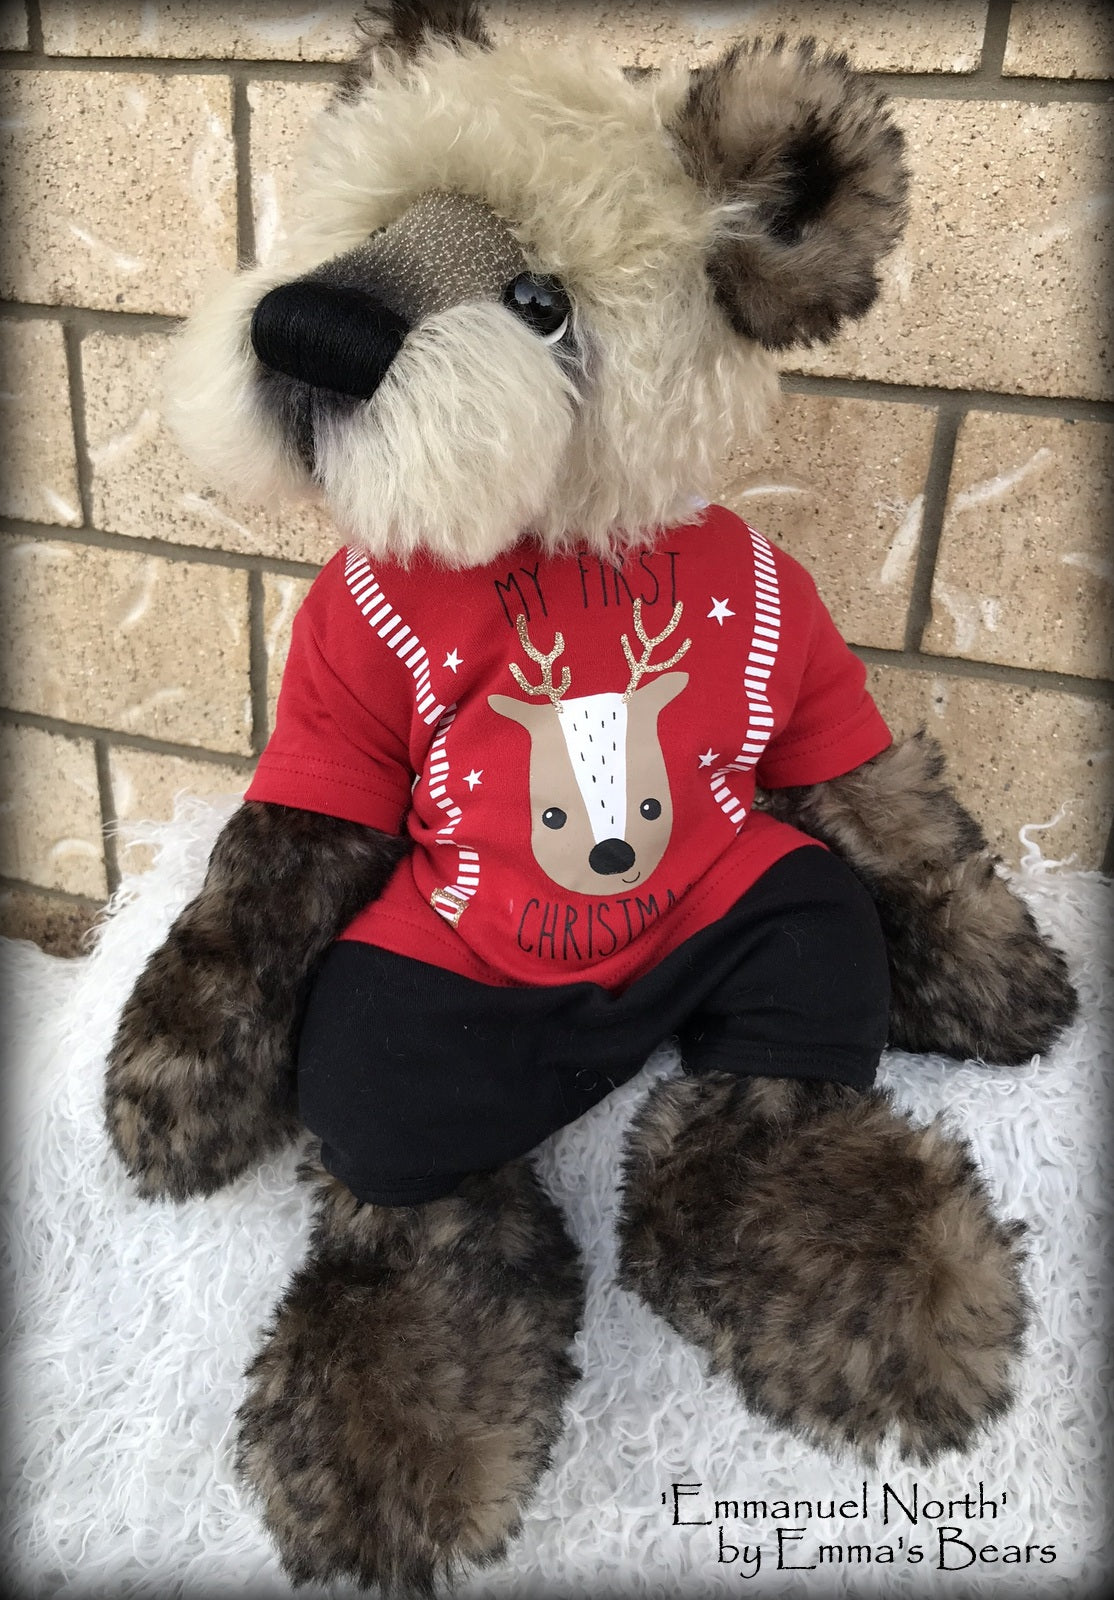 Emmanuel North - 20" Christmas 2018 Toddler Artist Bear by Emma's Bears - OOAK